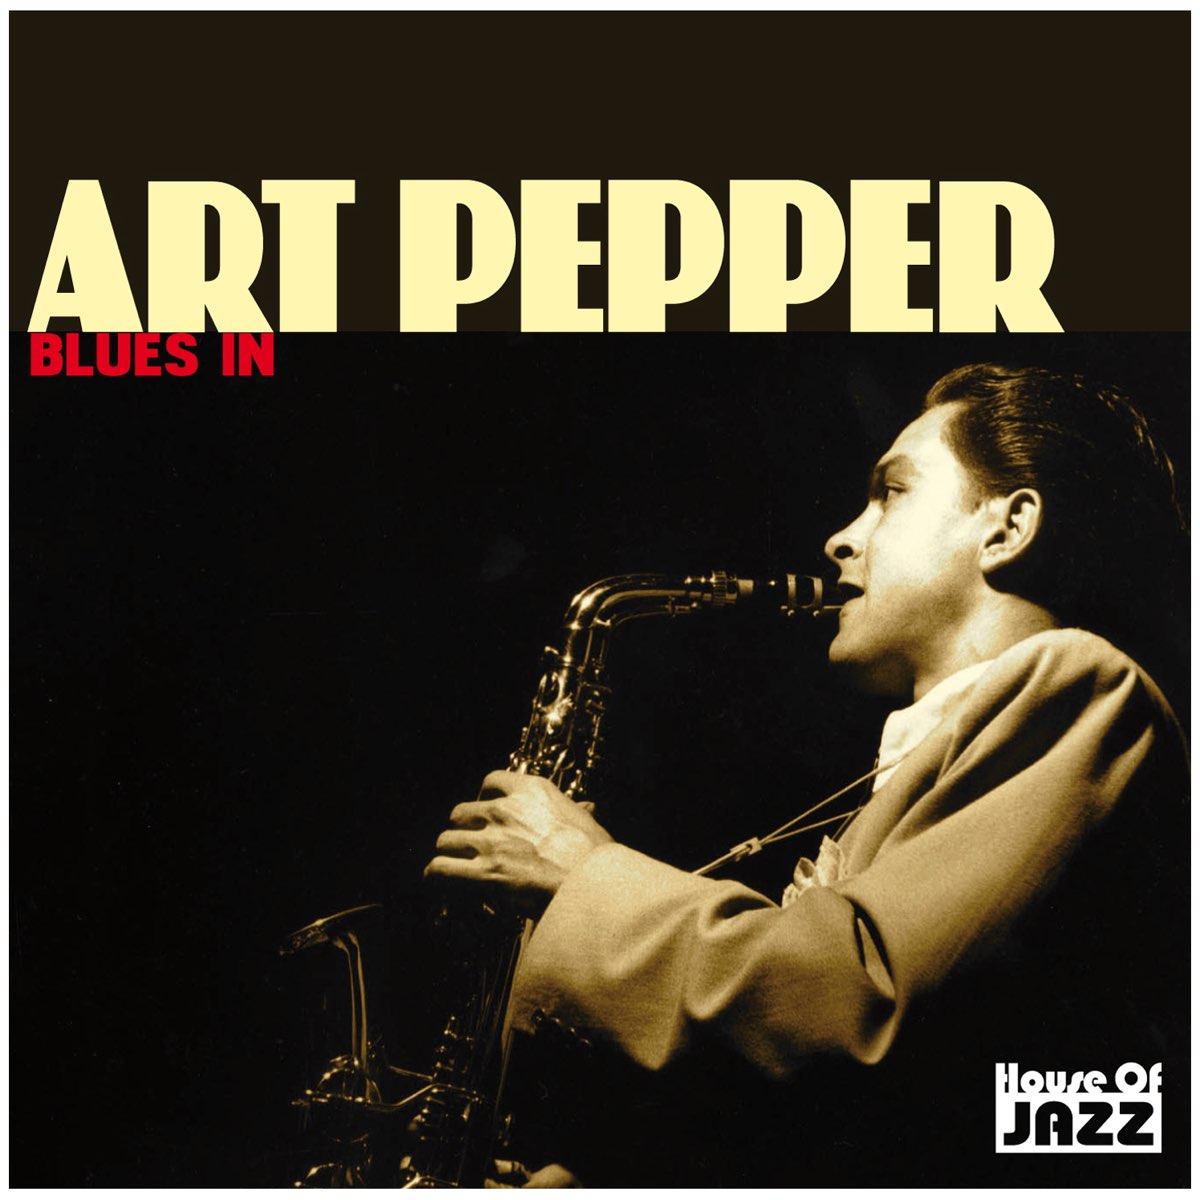 Art pepper. Pepper Art. Art Pepper Red Pepper Blues. Mel Torme, ray Anthony _ Live at the Playboy Jazz Festival.